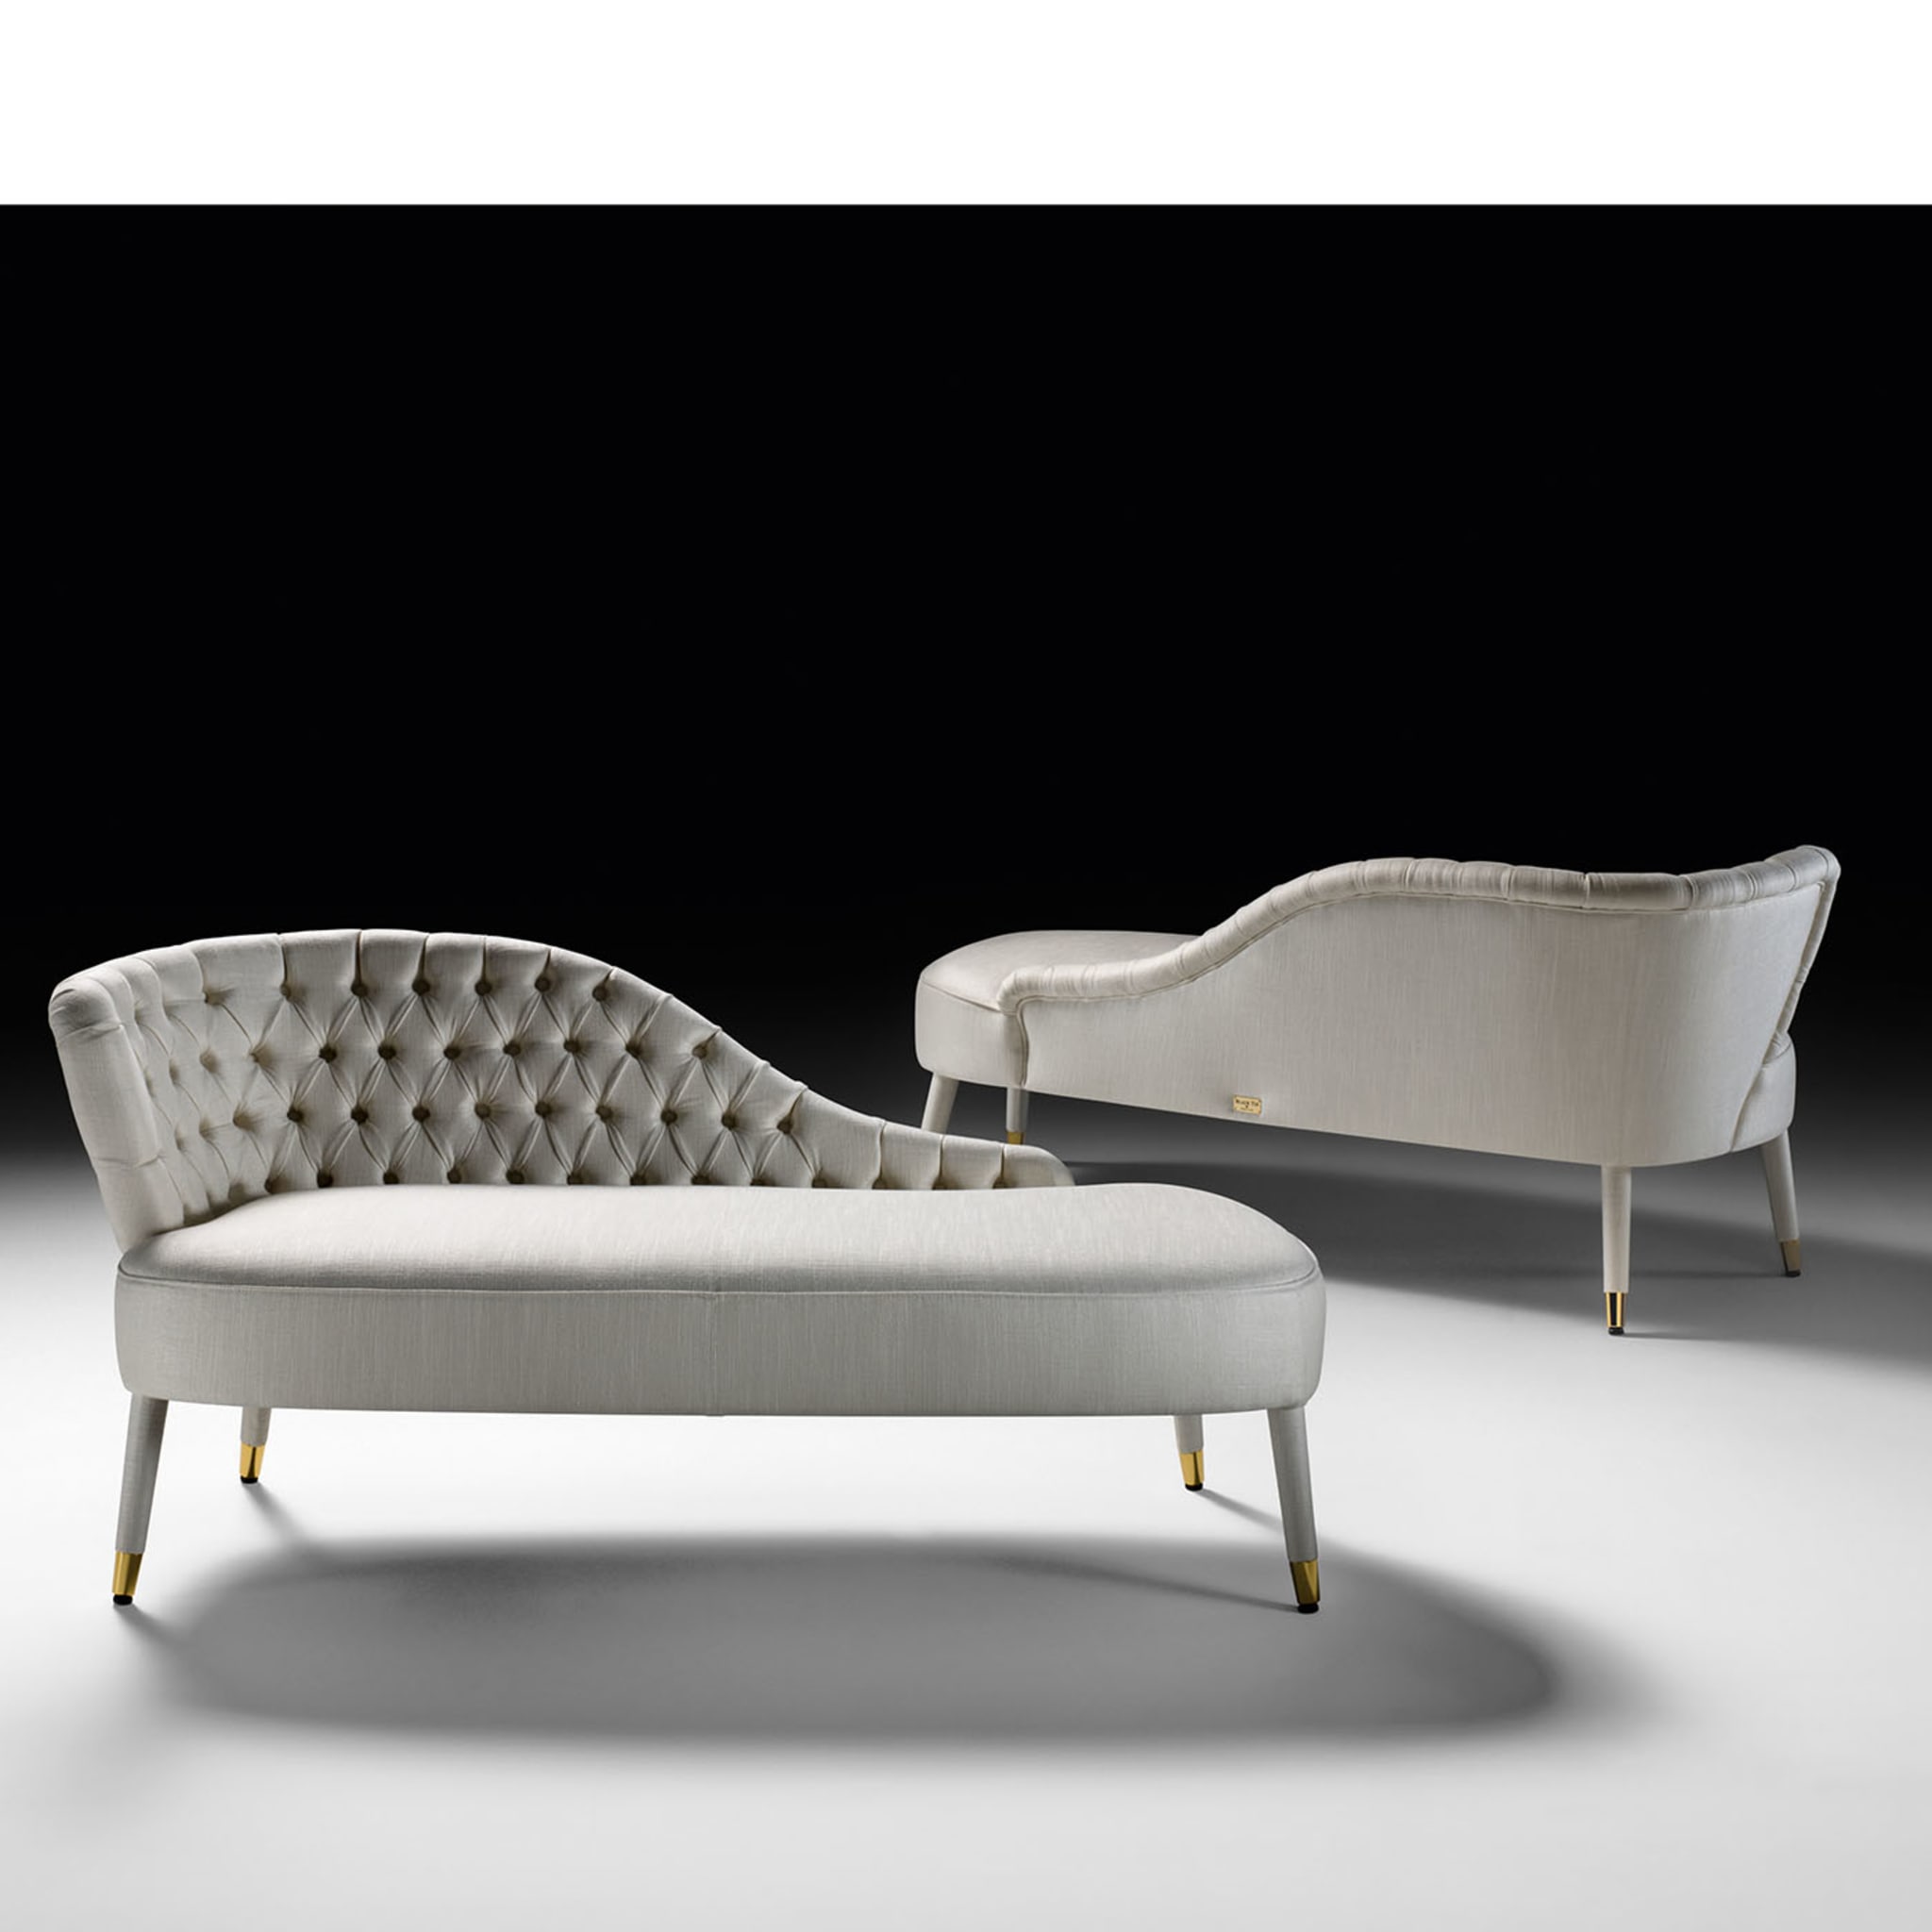 Penelope Asymmetrical Gray Sofa - Alternative view 1